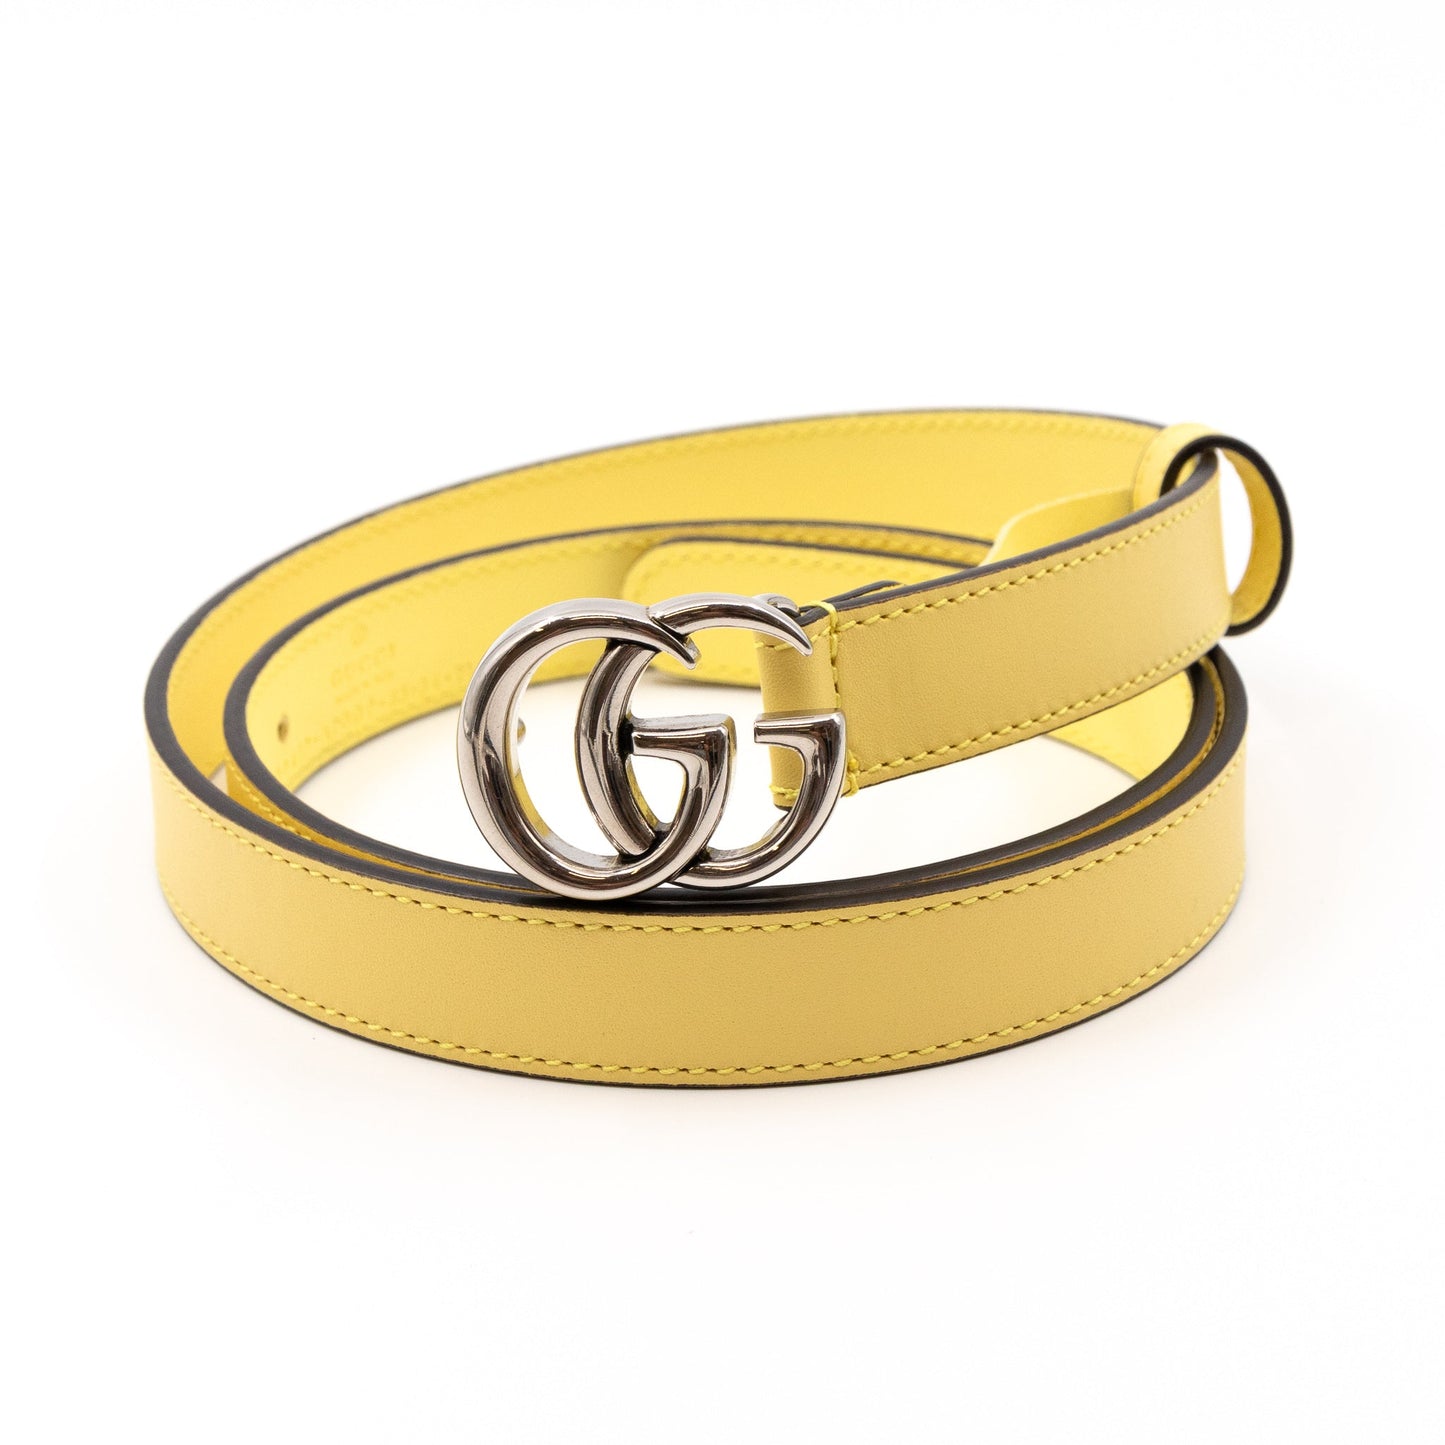 GG Marmont Slim Belt Yellow Leather 85 cm